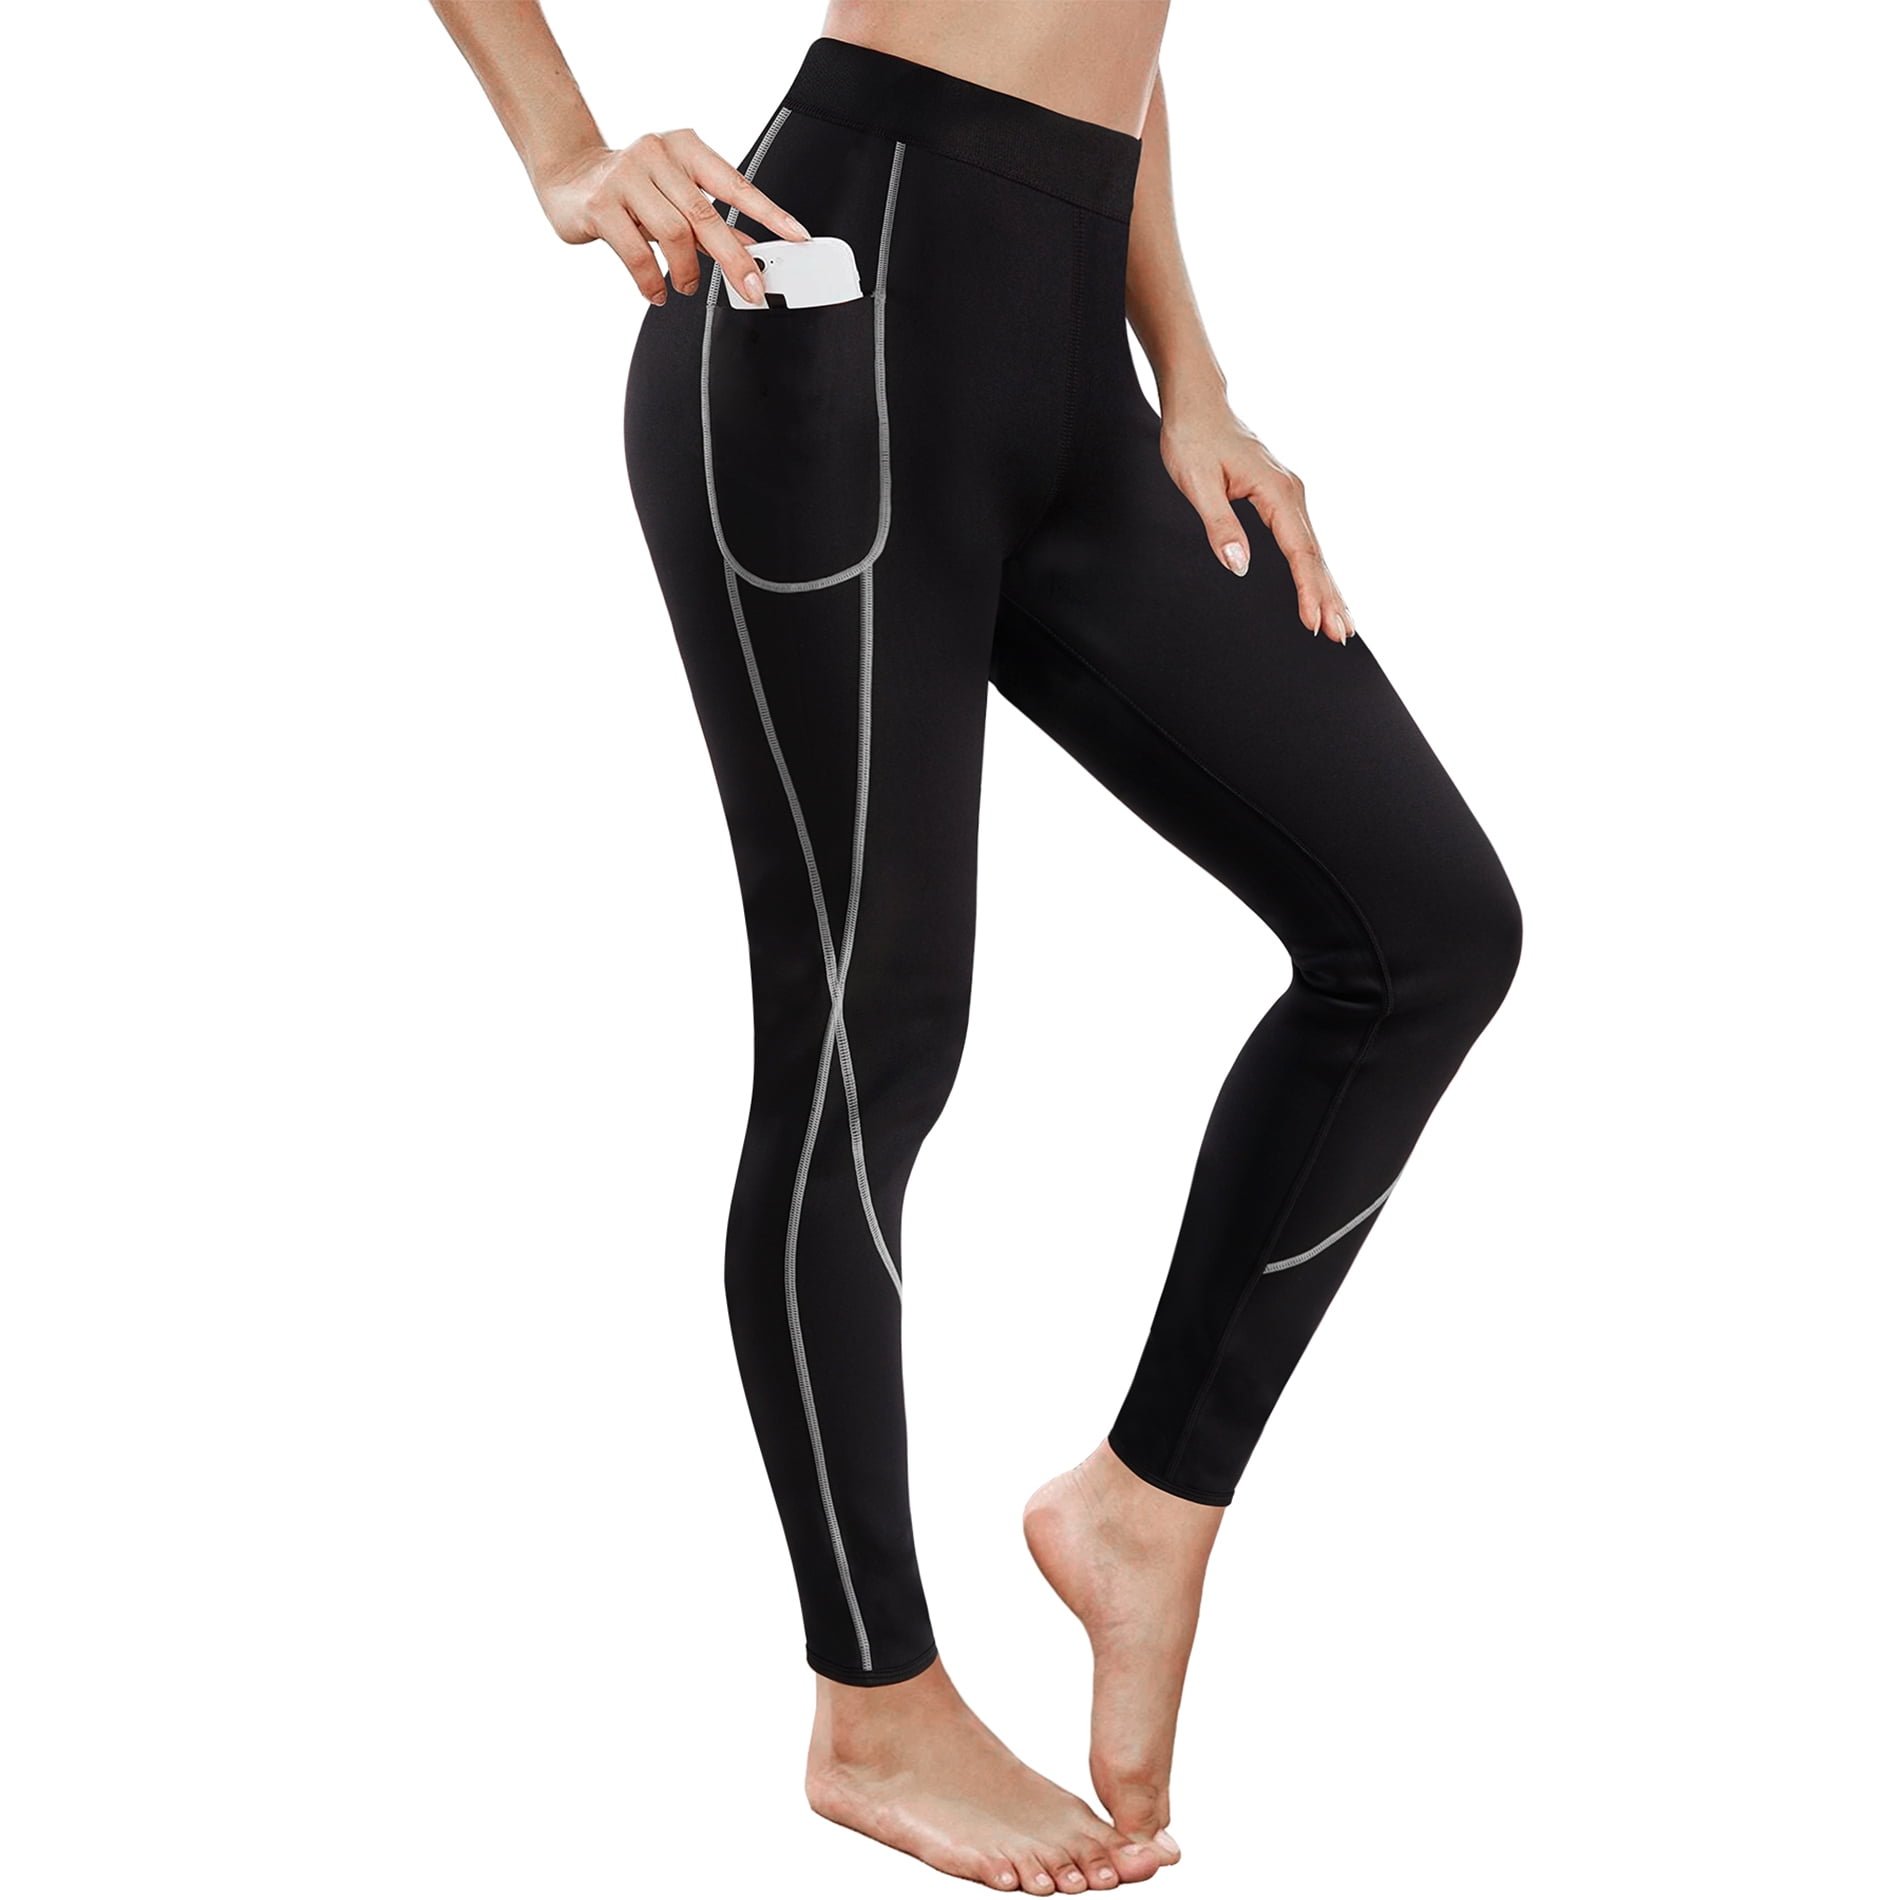 Eleady Women Neoprene Sauna Slimming Pants For Leggings Hot Thermo Sweat Body Shaper Capri(Black Small) -